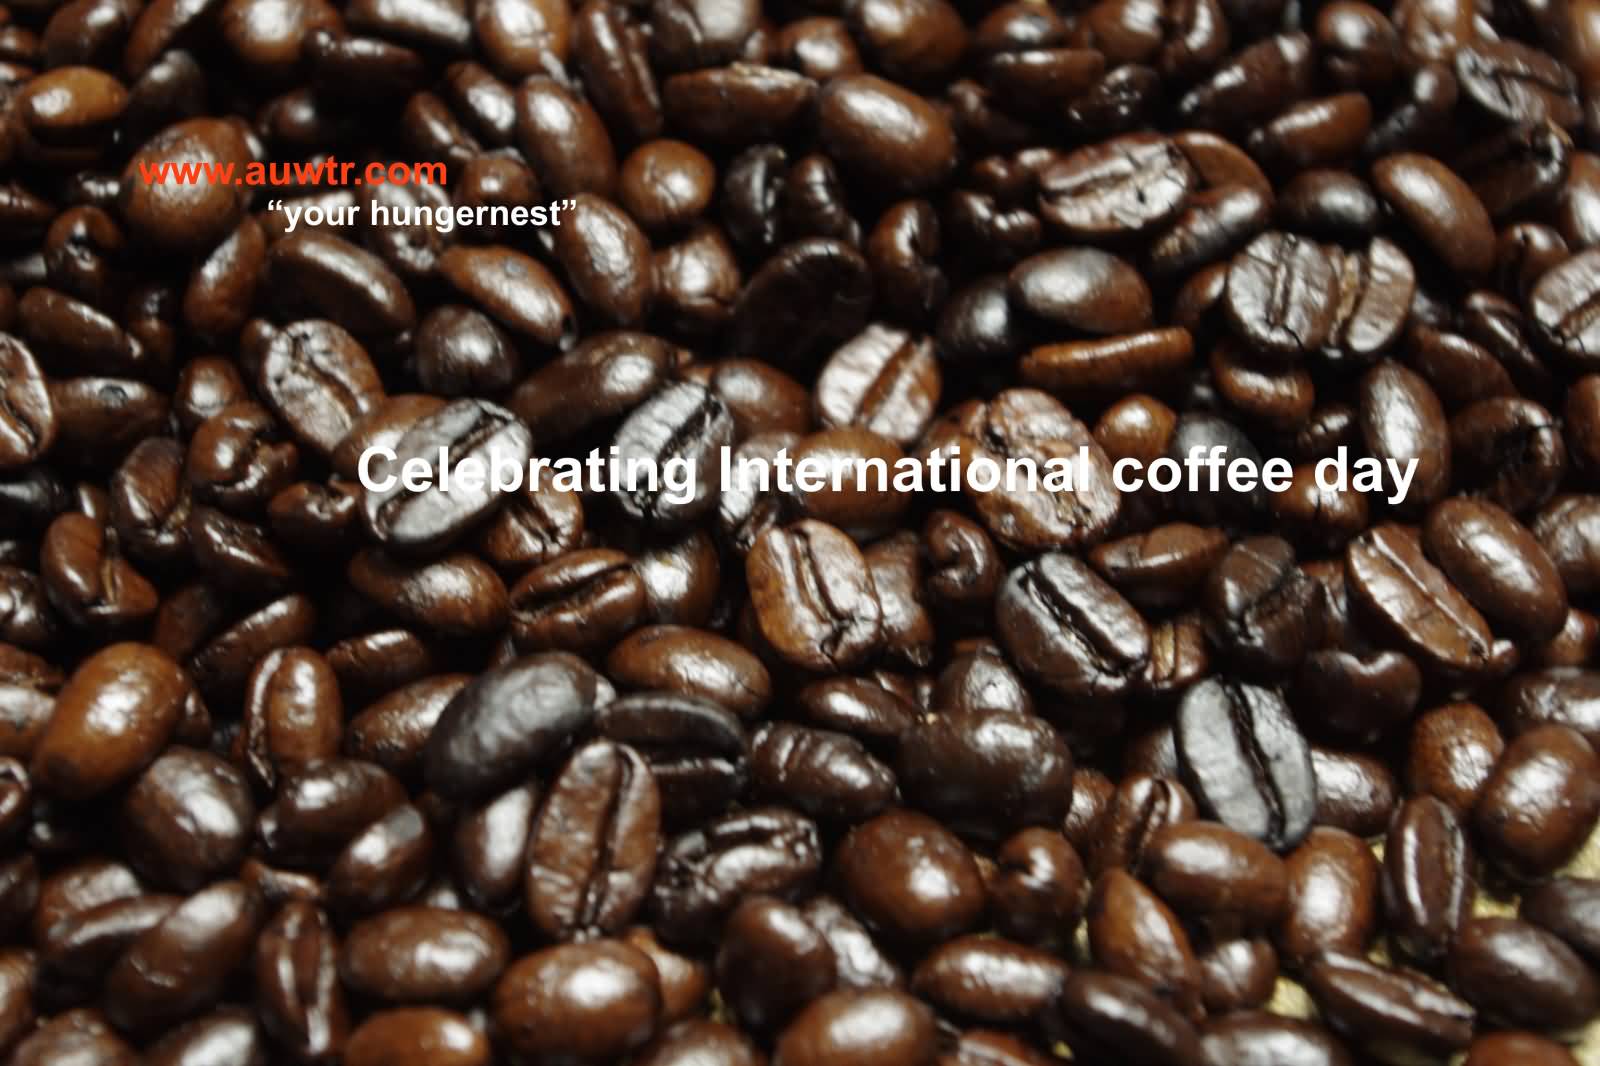 Celebrating International Coffee Day 2016